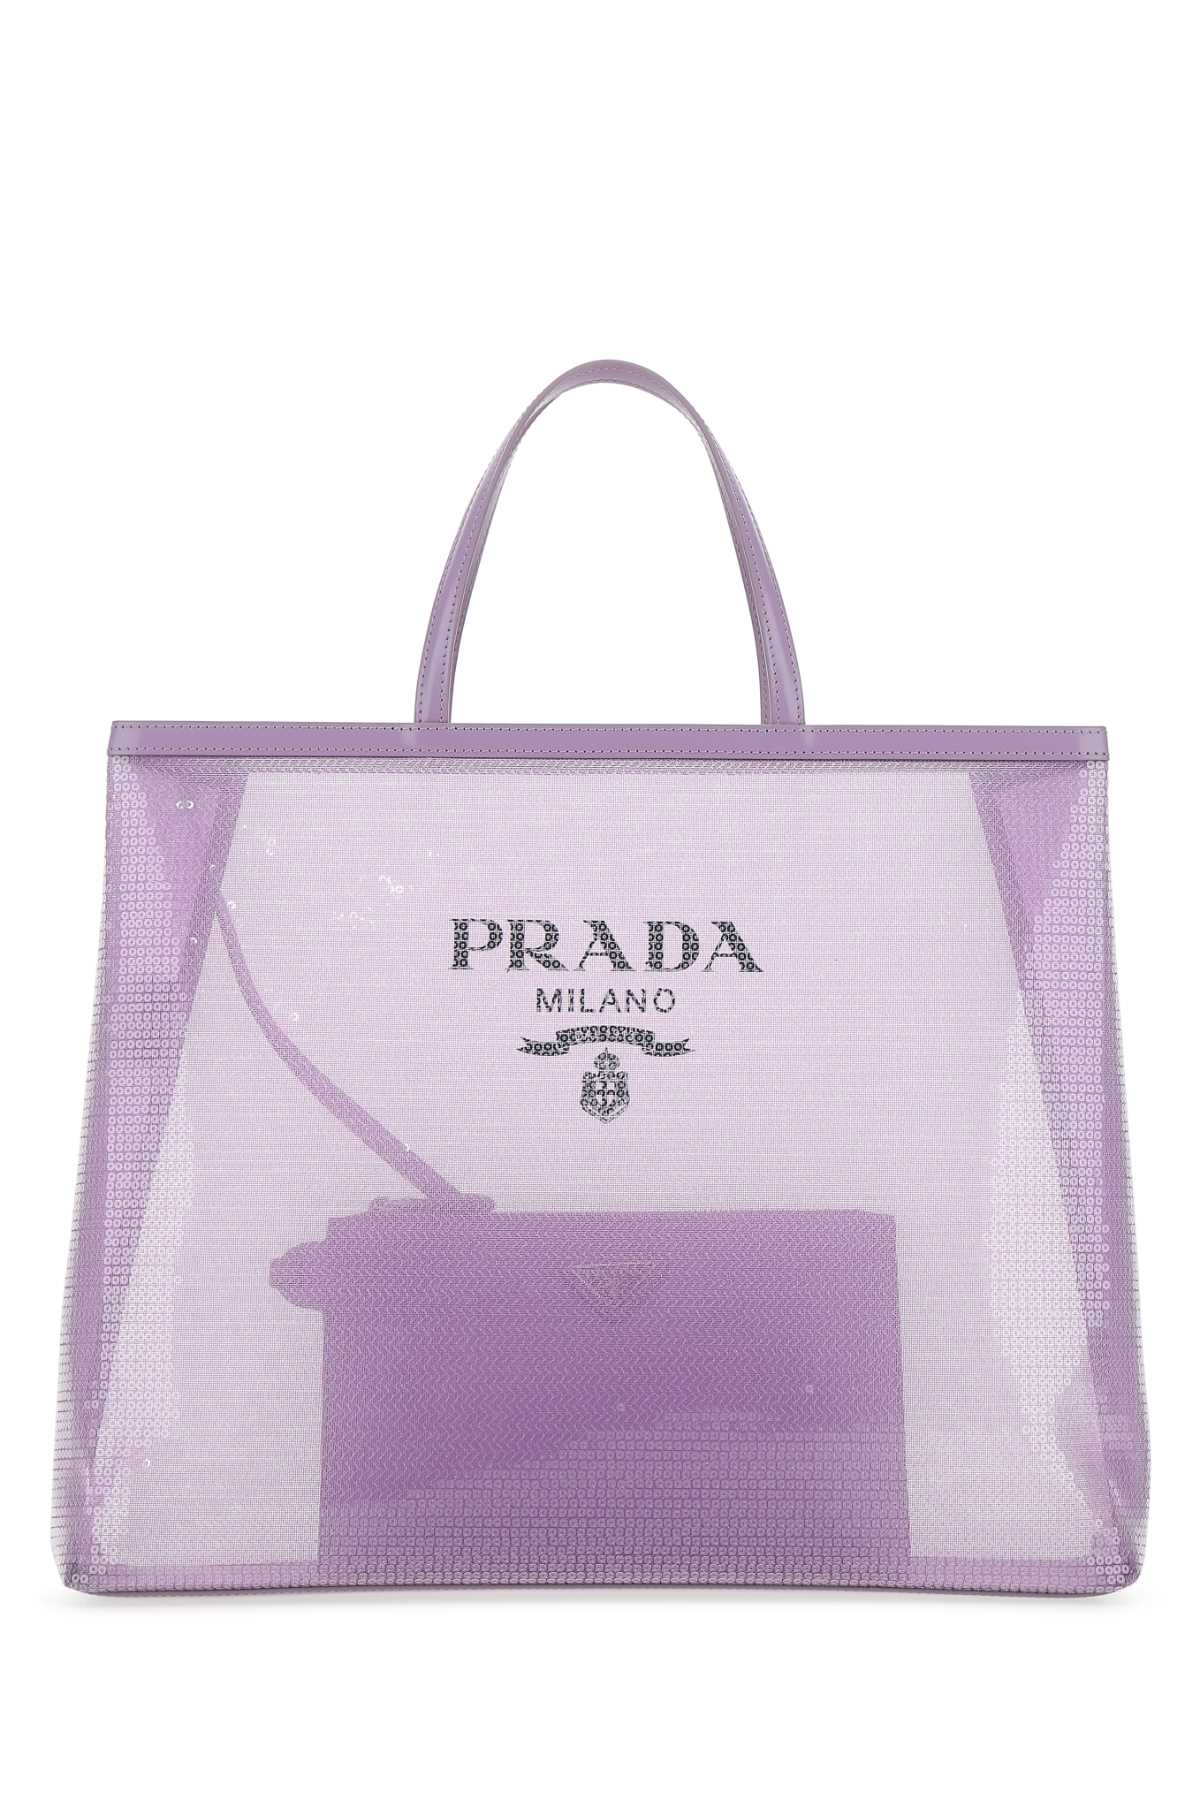 Prada Lilac Mesh Shopping Bag